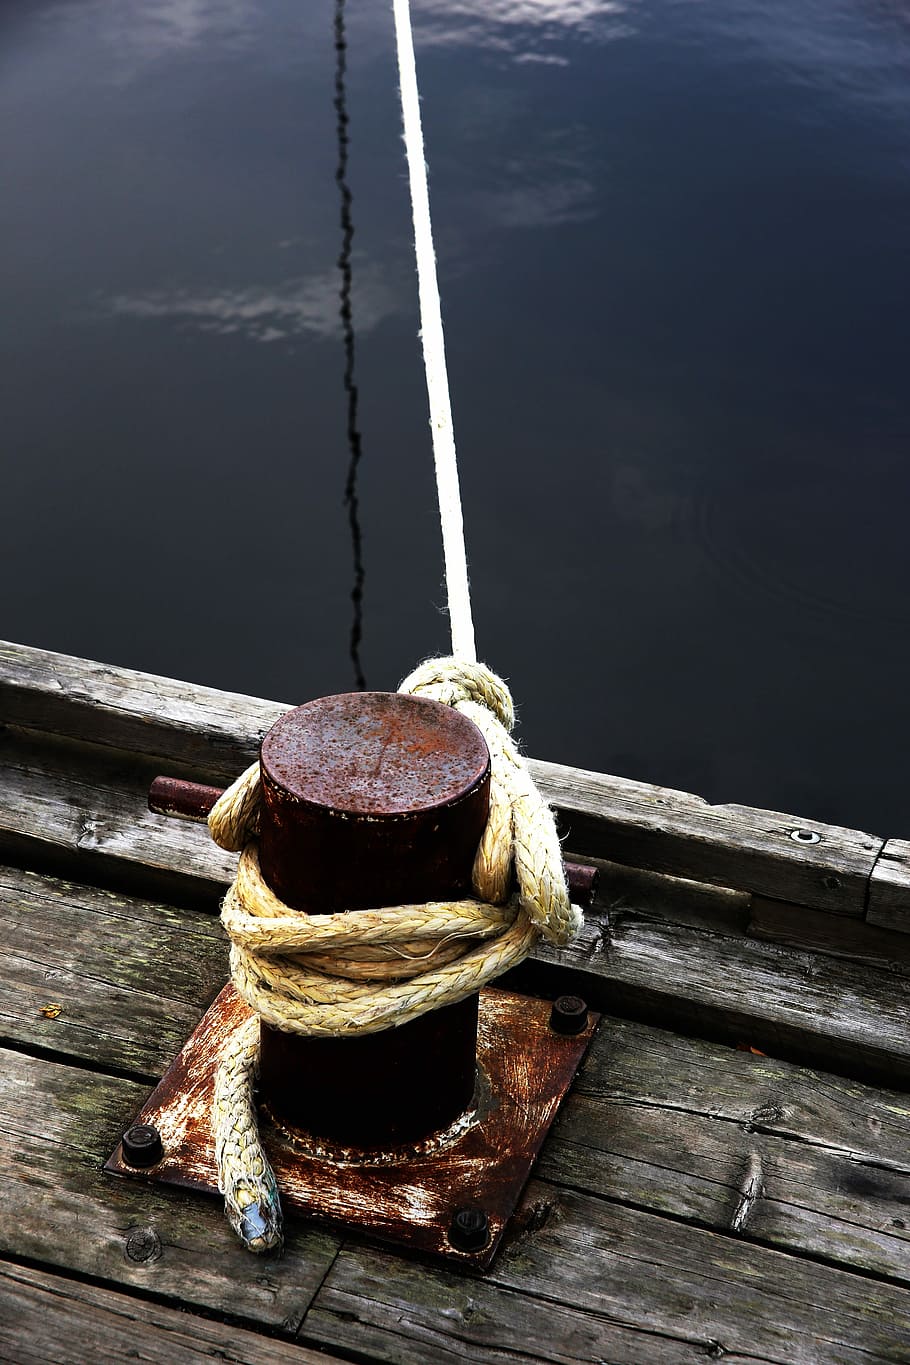 Pallet, Kaj, Pir, förtöjjning, rope, nautical vessel, wood - material, water, tied up, tied knot